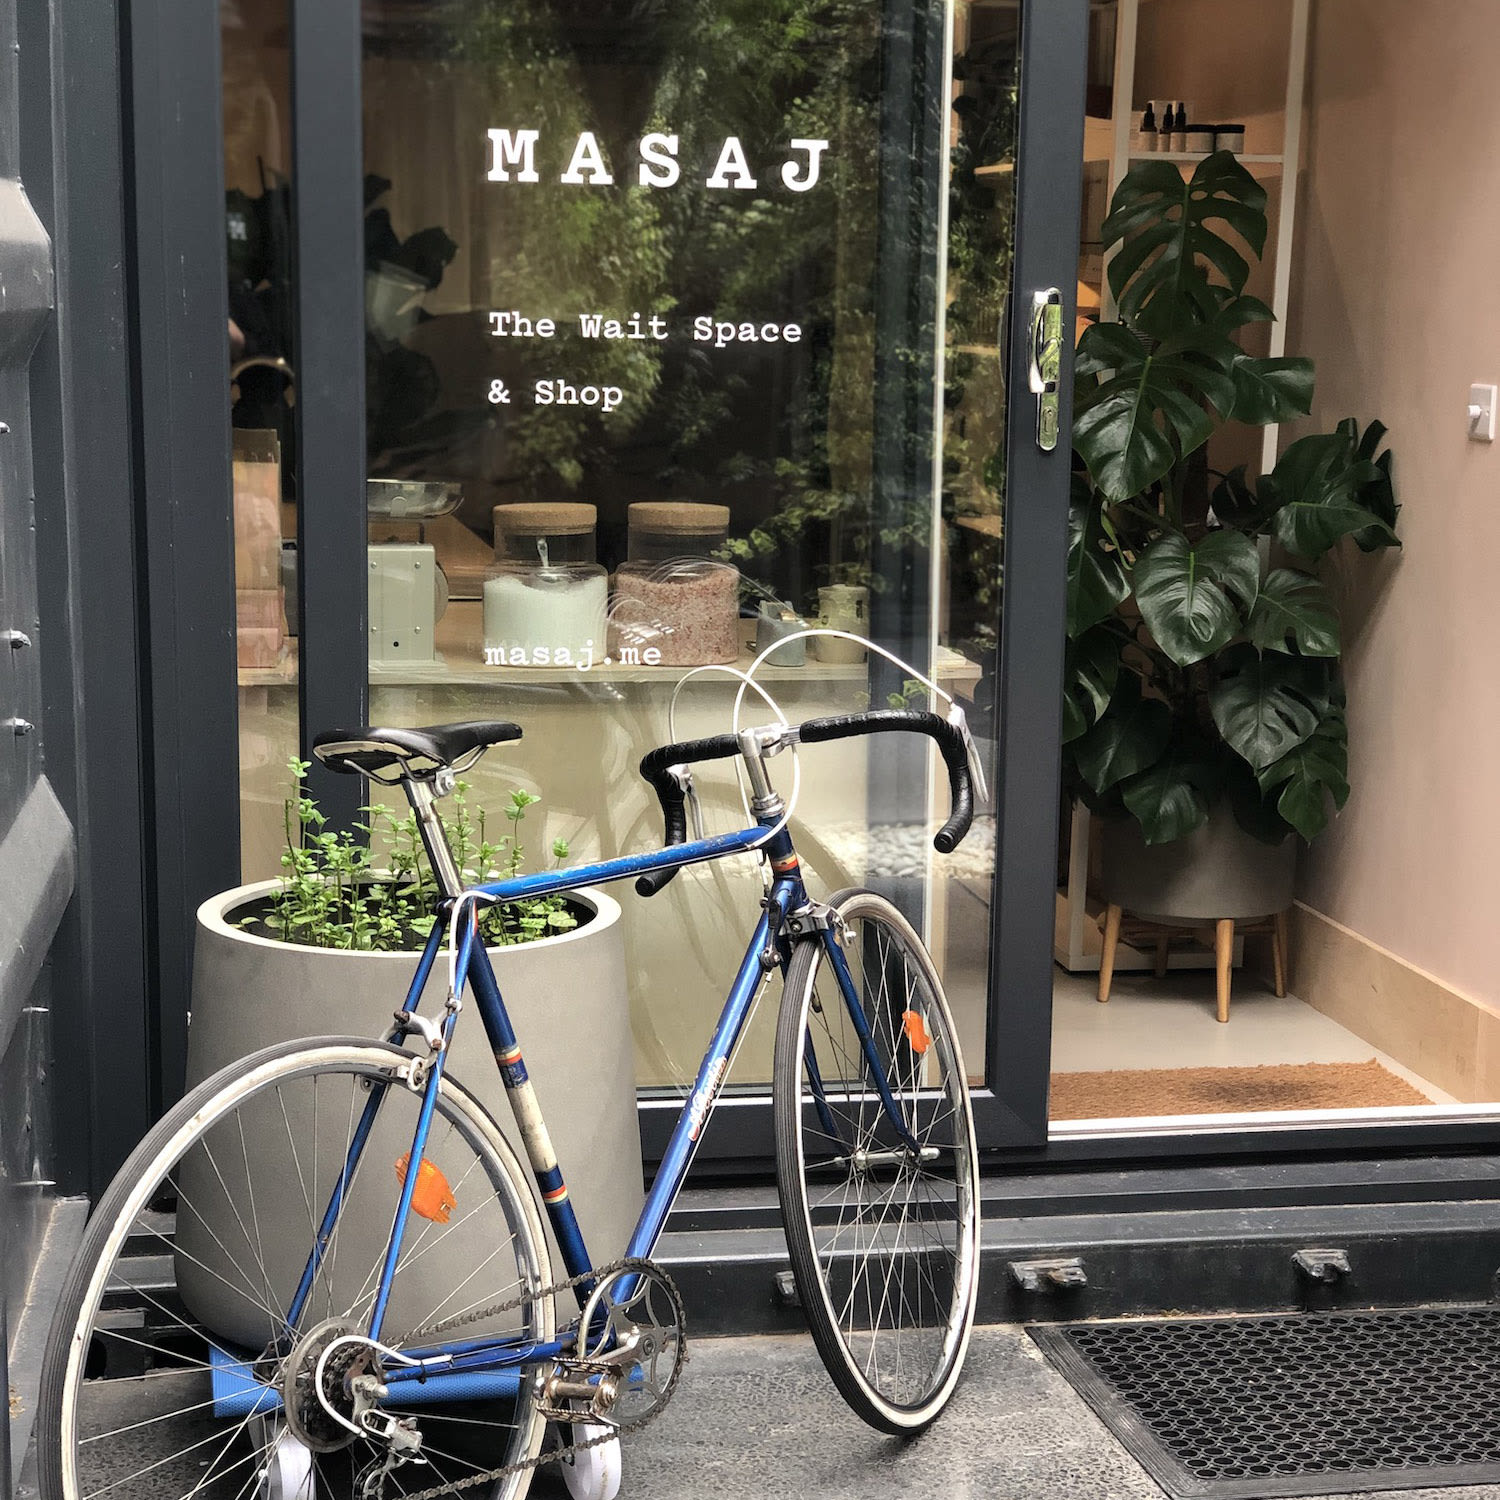 A bike outside the MASAJ studio